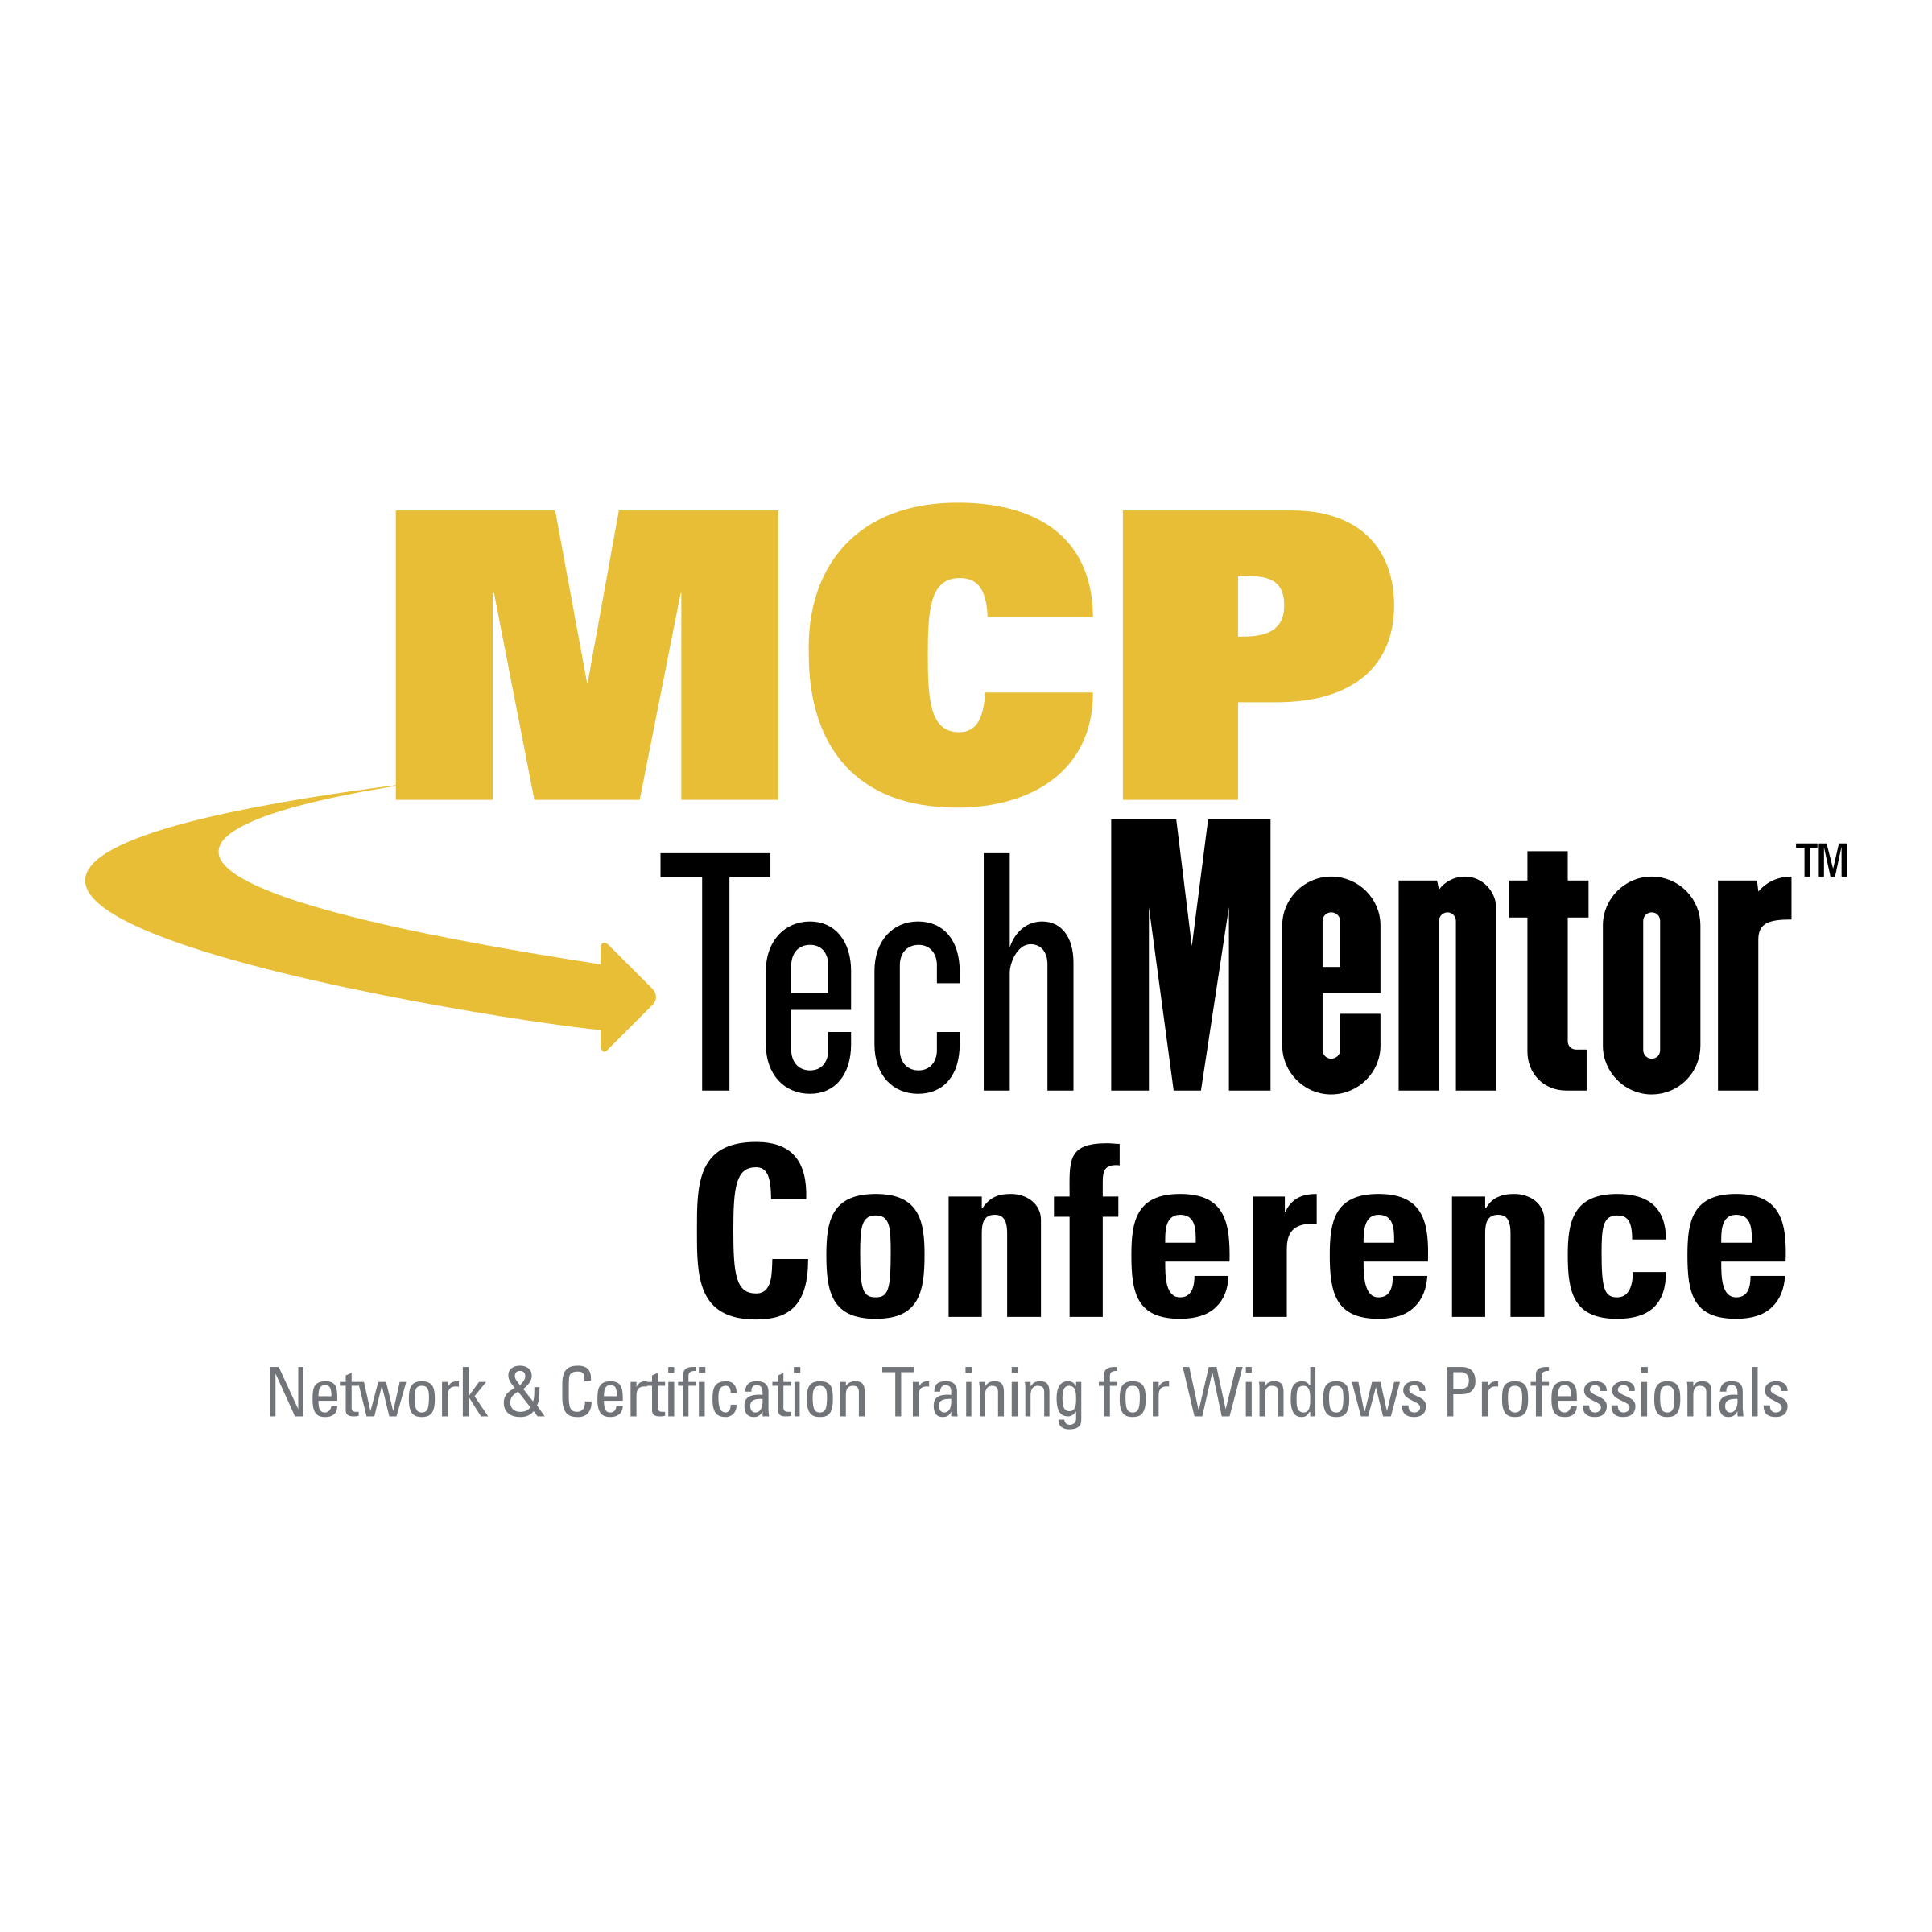 MCP Logo - MCP TechMentor Conference Logo PNG Transparent & SVG Vector